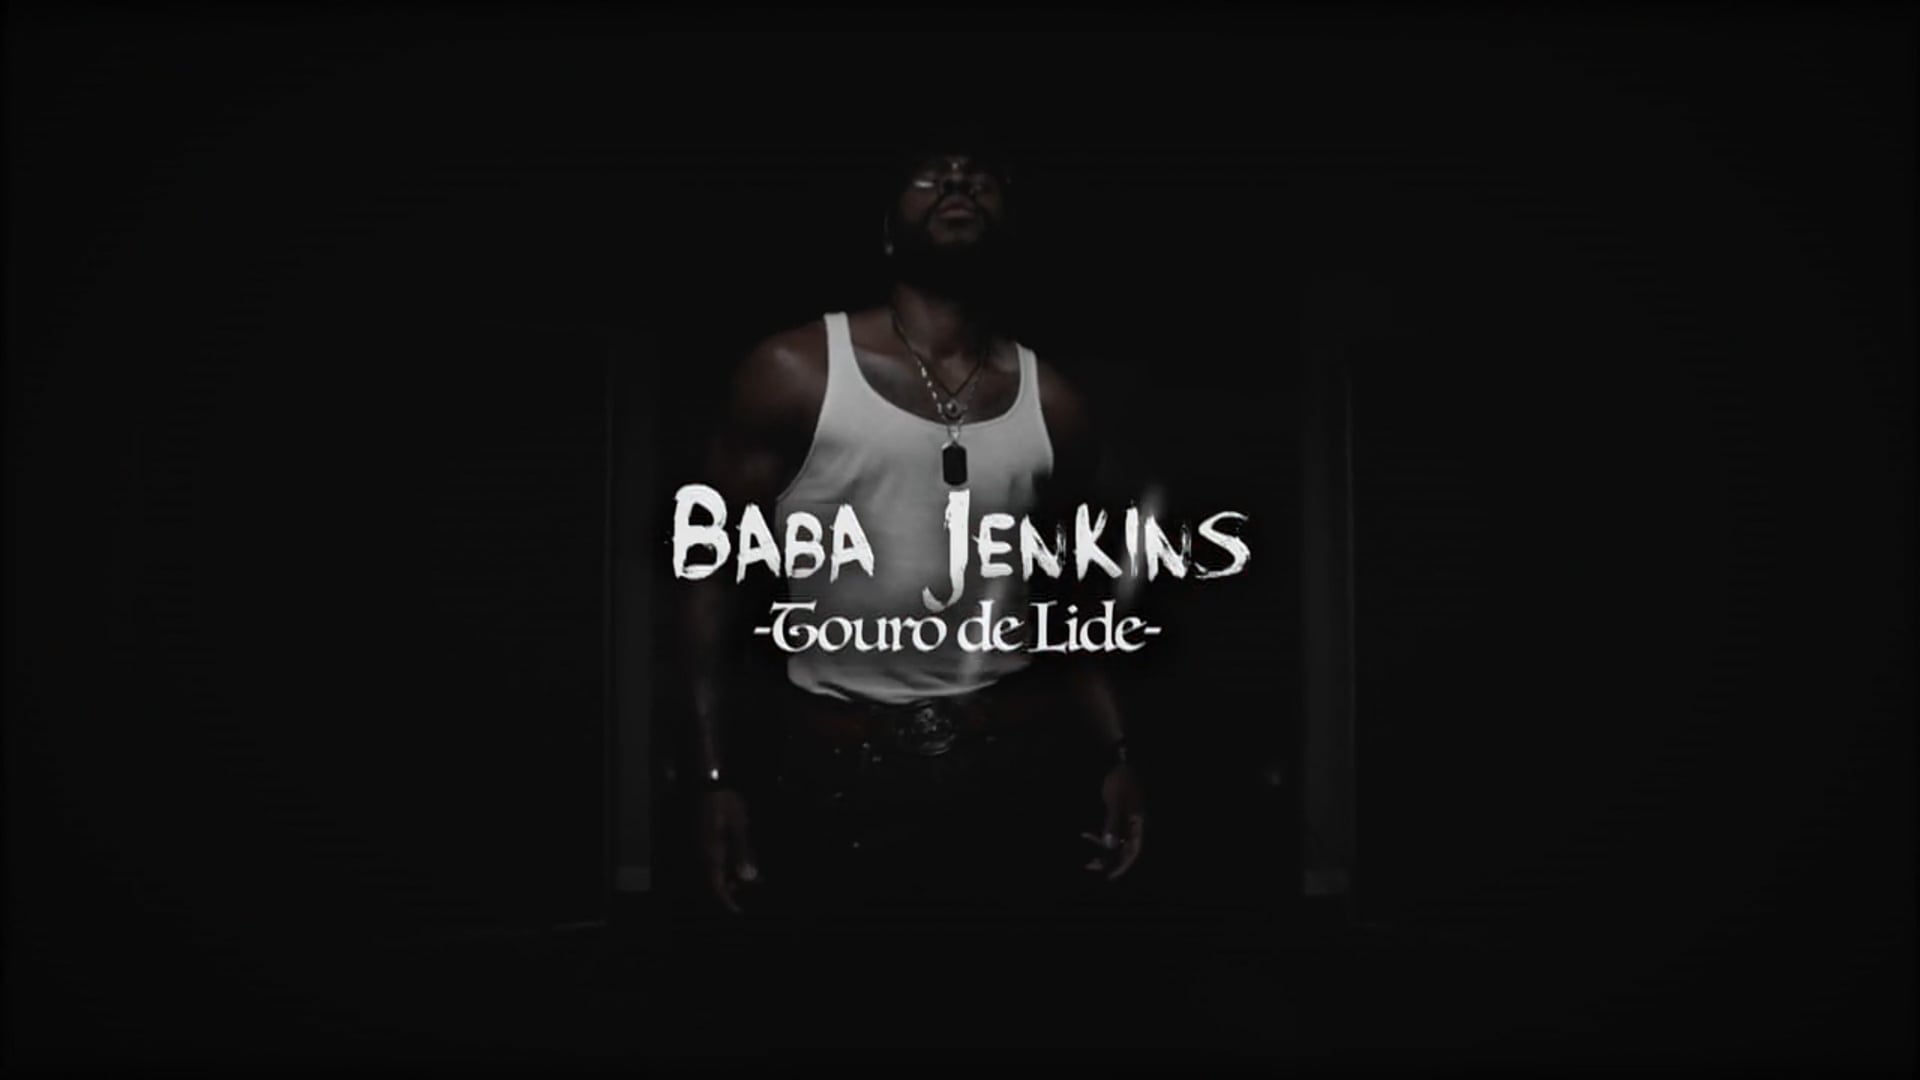 Watch Baba Jenkins - Touro de Lide on our Free Roku Channel